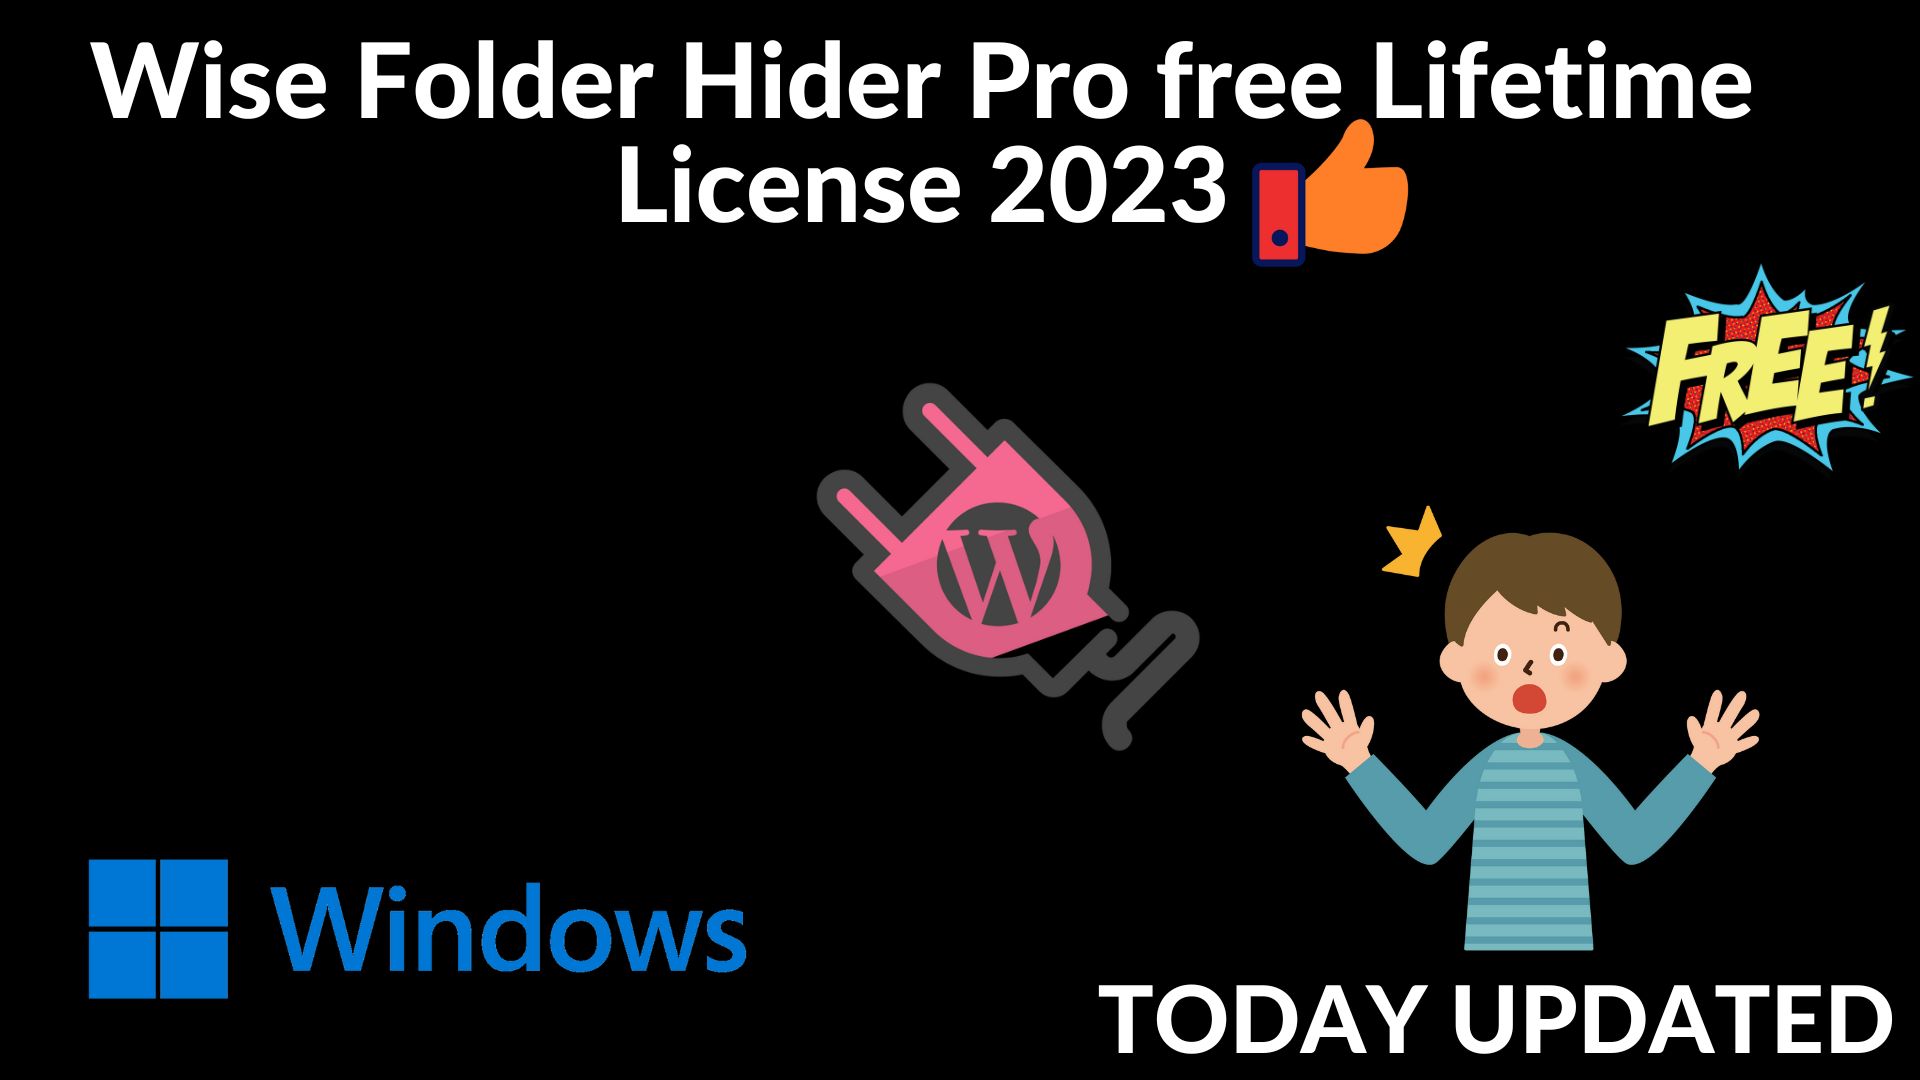 Wise folder hider pro free lifetime license 2023